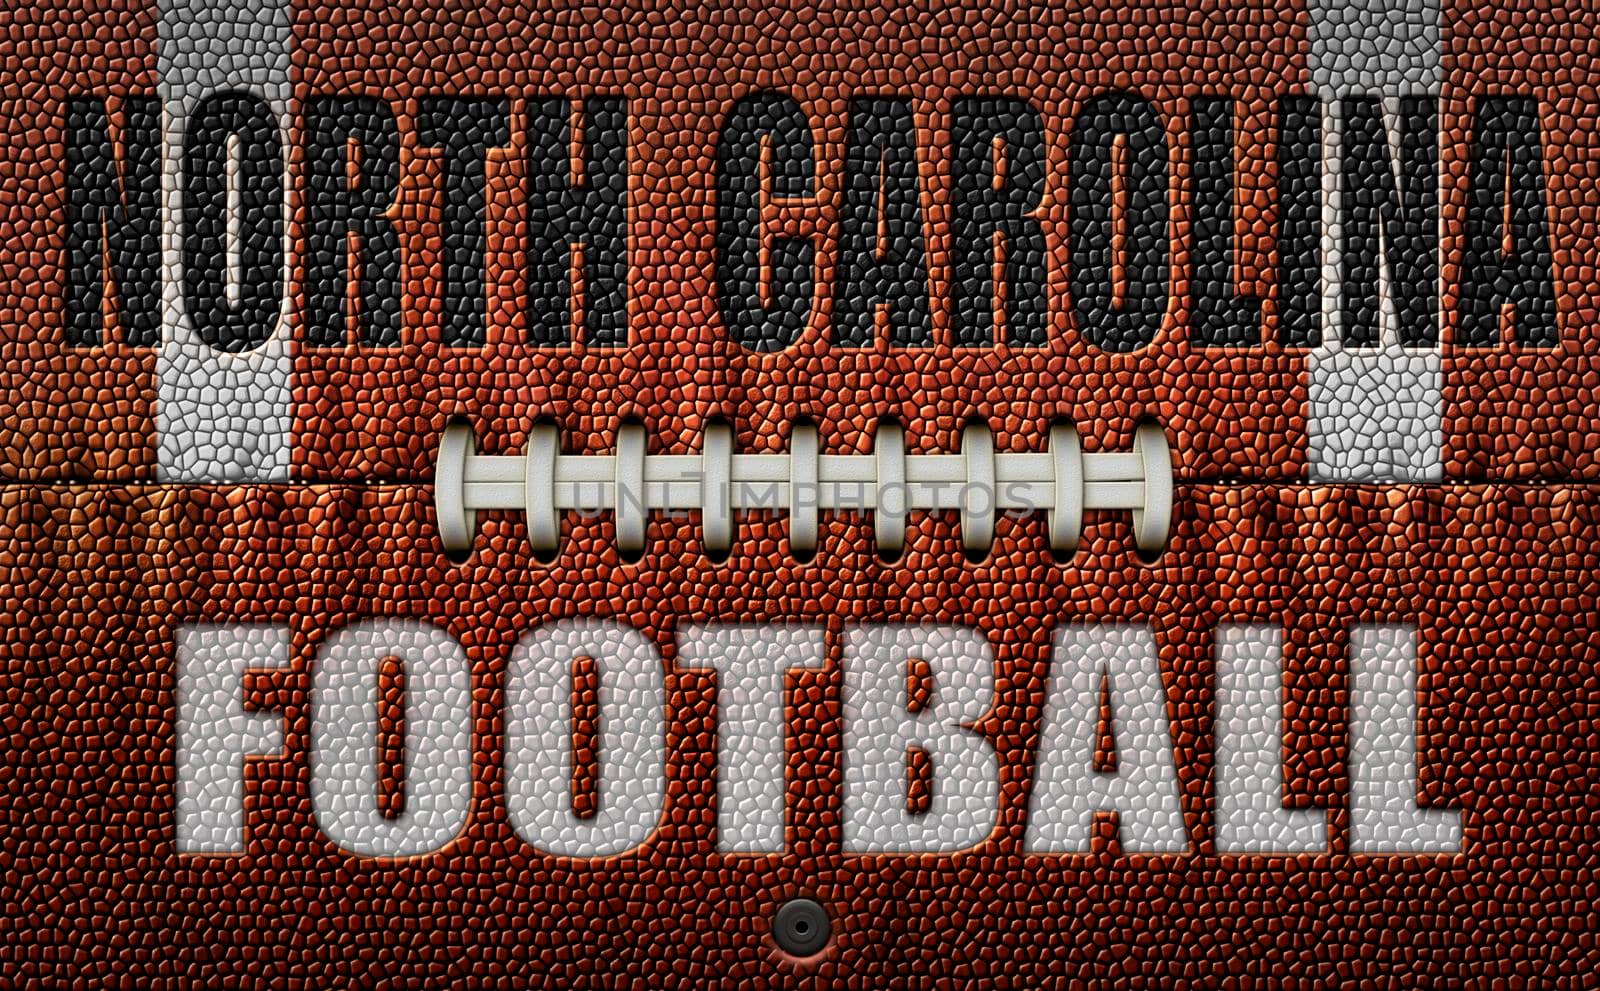 North Carolina Football Text on a Flattened Football by jimlarkin